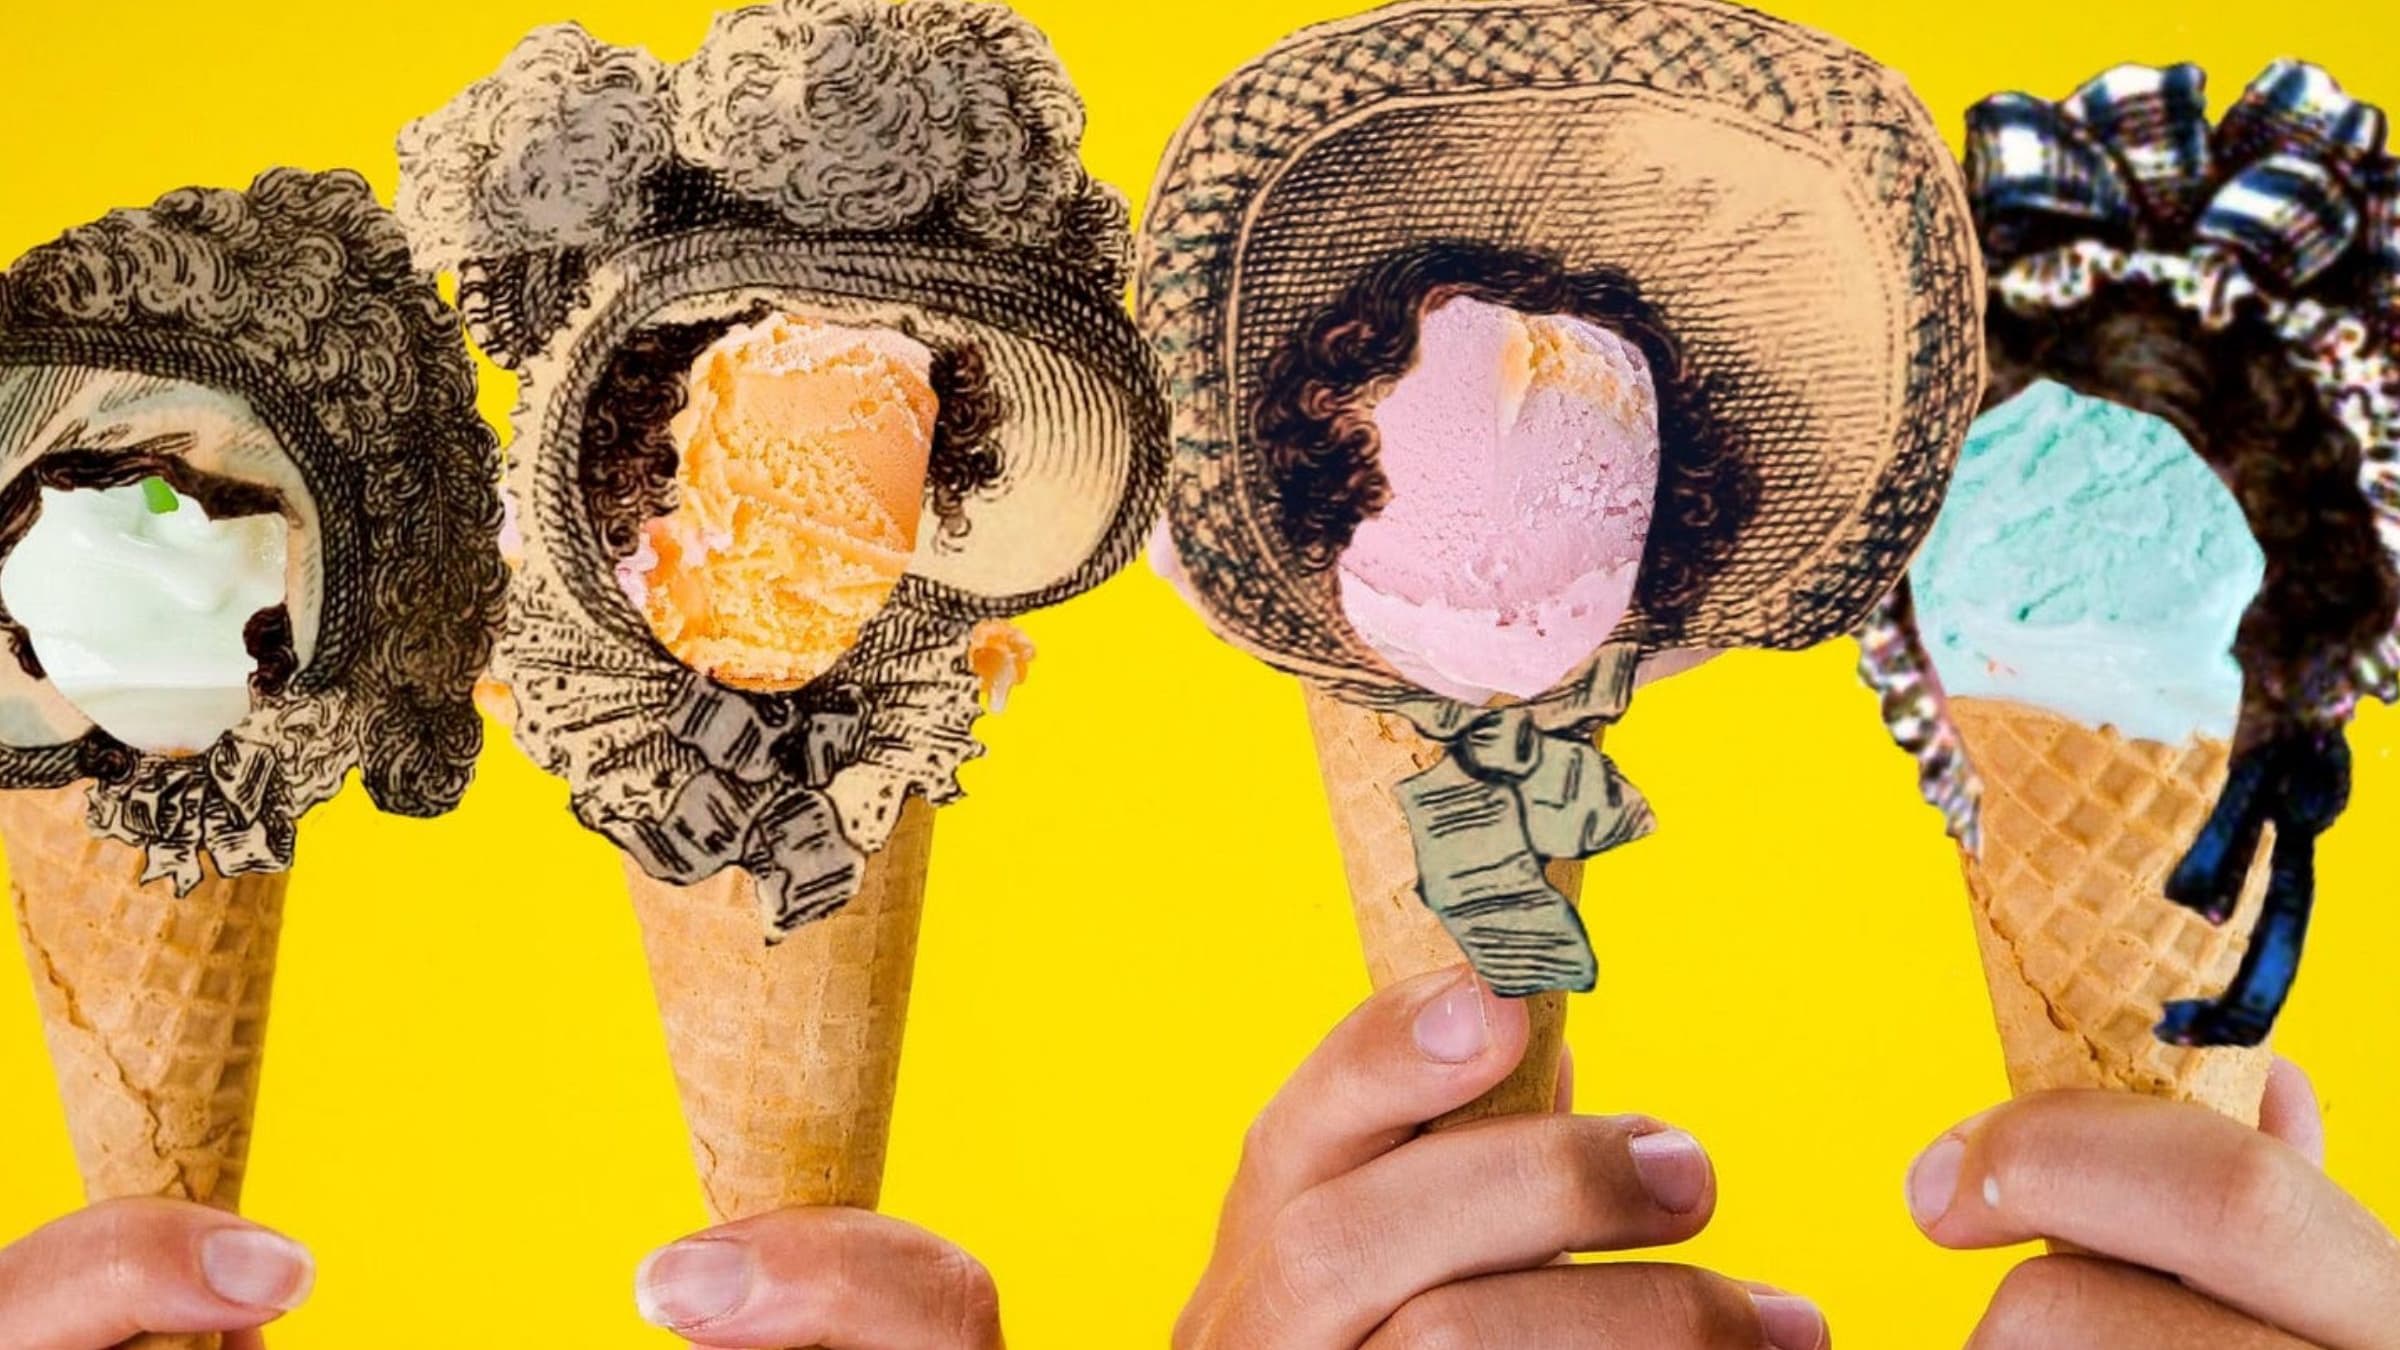 Humor: Try this Jane Austen inspired ice cream line